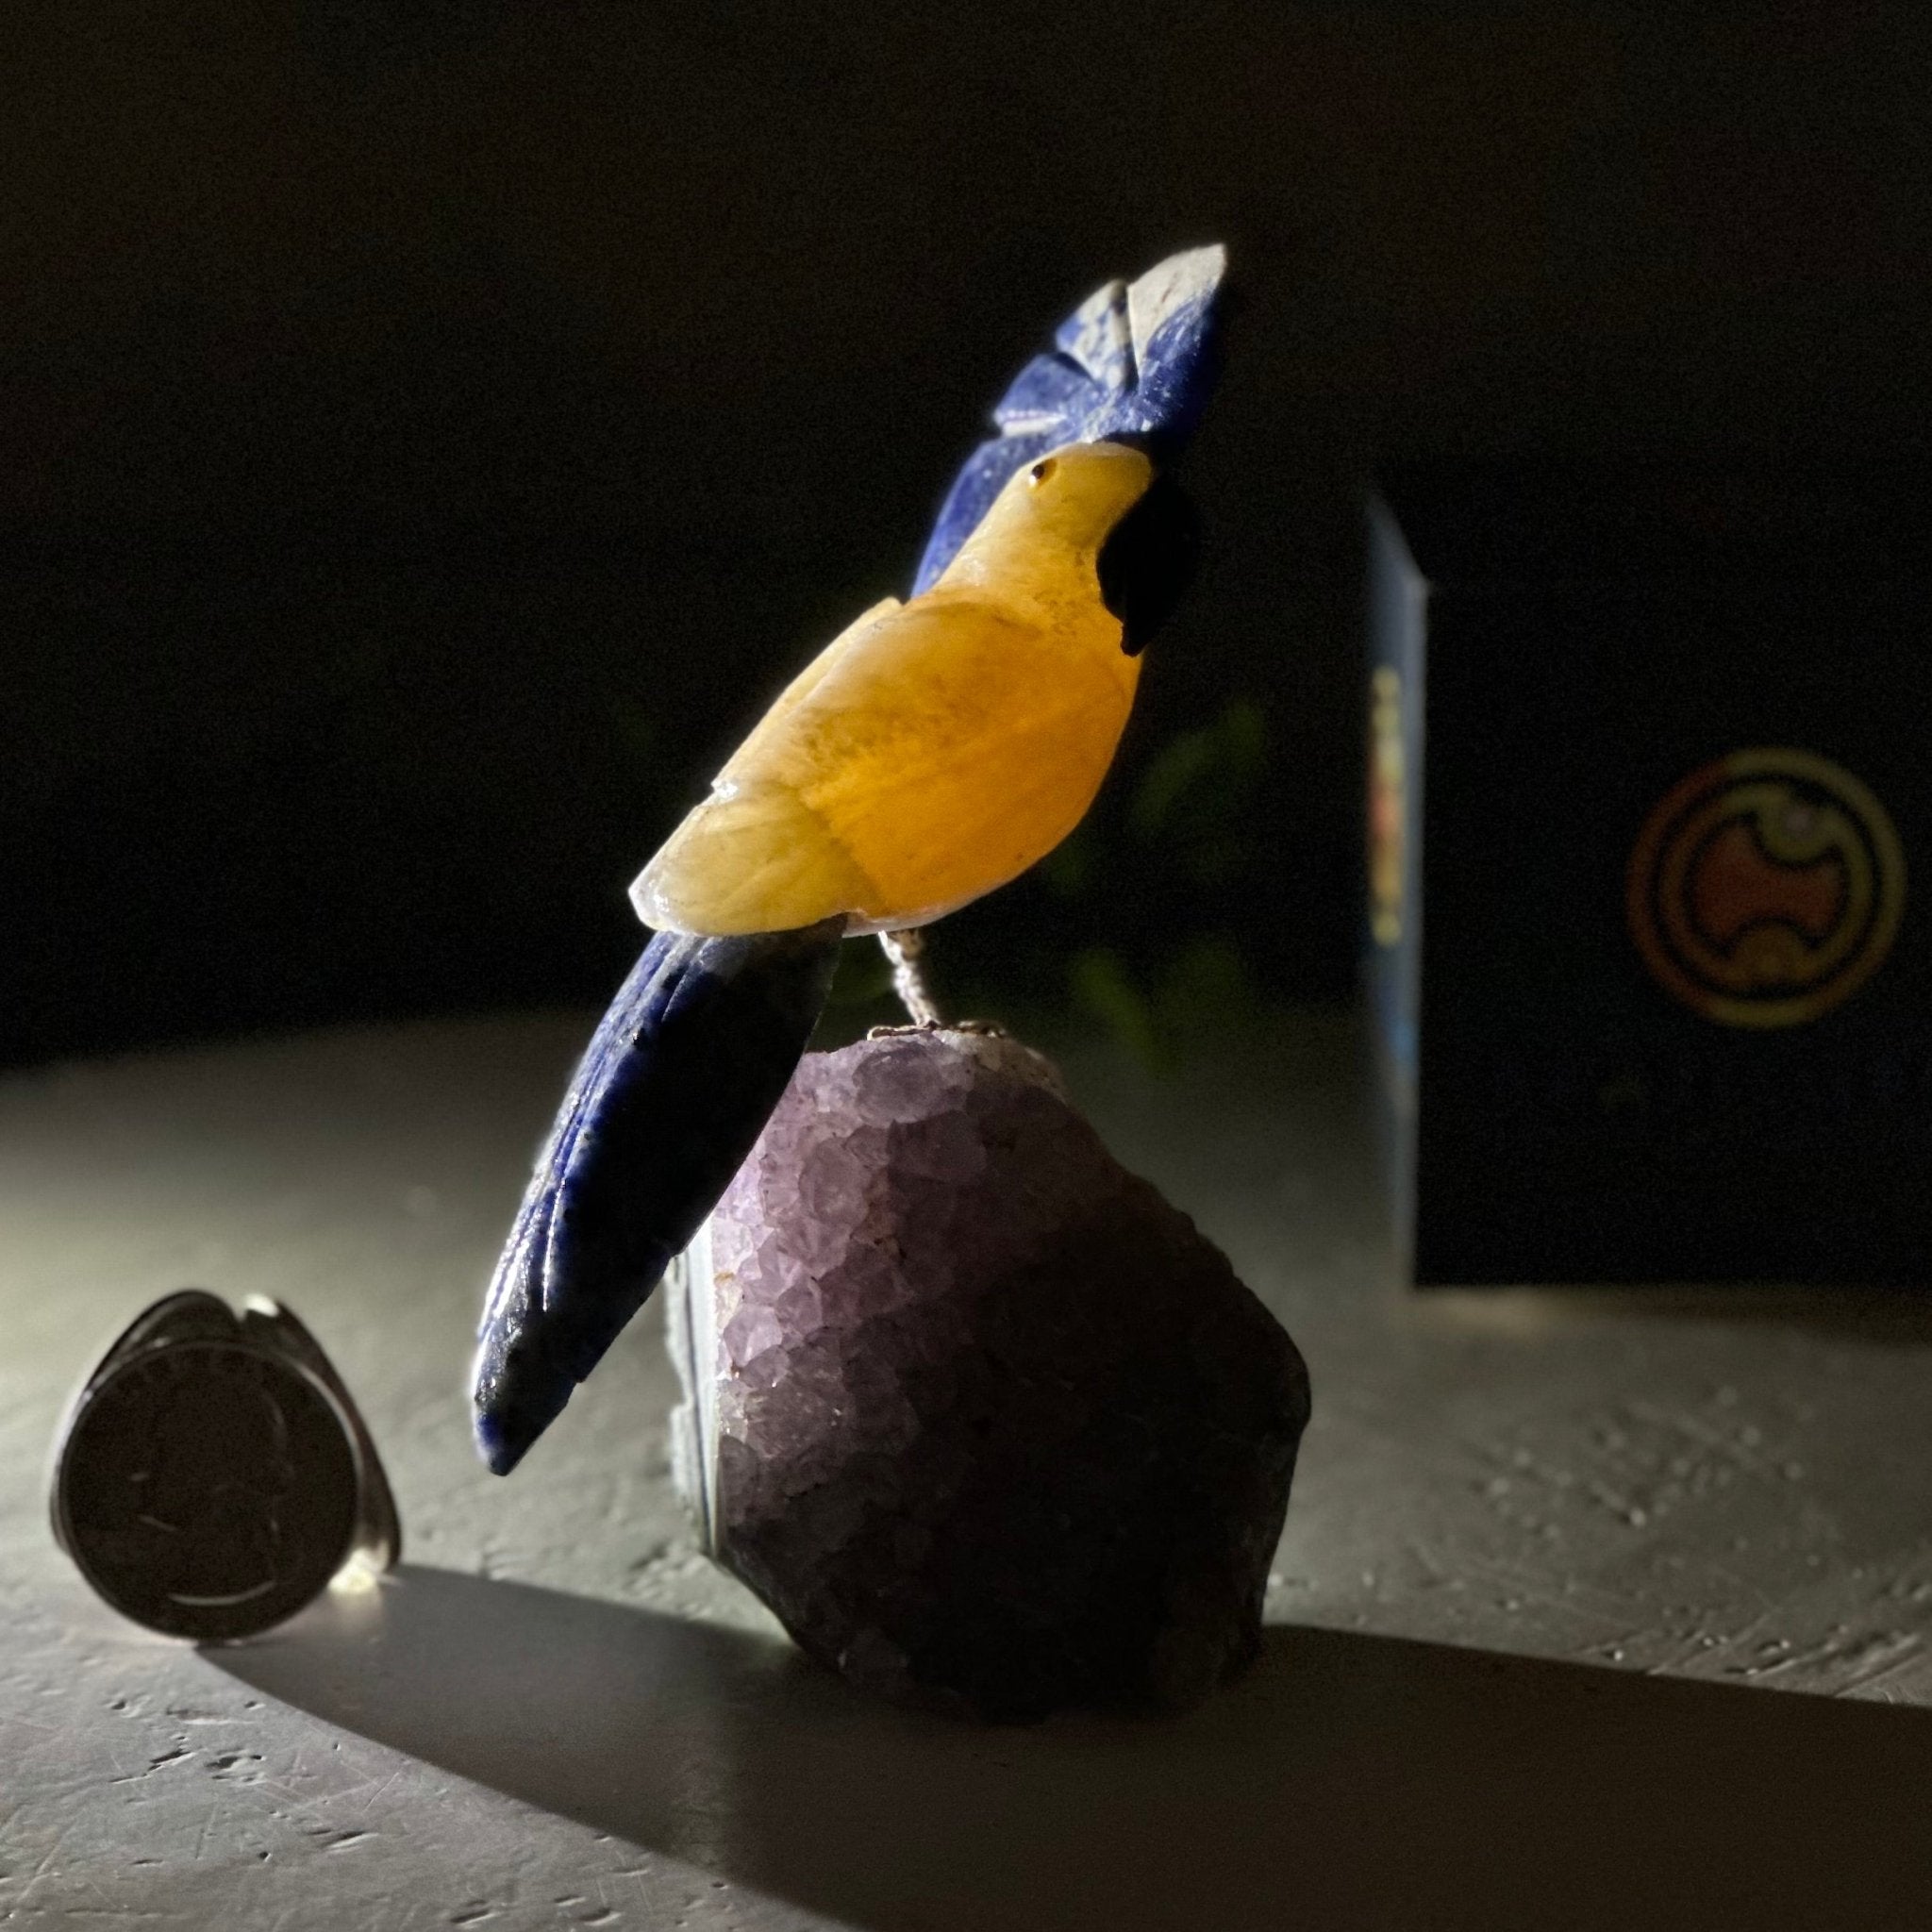 Hand-Carved Crystal Bird, Yellow Calcite Cockatoo, Amethyst Base, 4.3" Tall #3001-YCCAM-031 - Brazil GemsBrazil GemsHand-Carved Crystal Bird, Yellow Calcite Cockatoo, Amethyst Base, 4.3" Tall #3001-YCCAM-031Crystal Birds3001-YCCAM-031